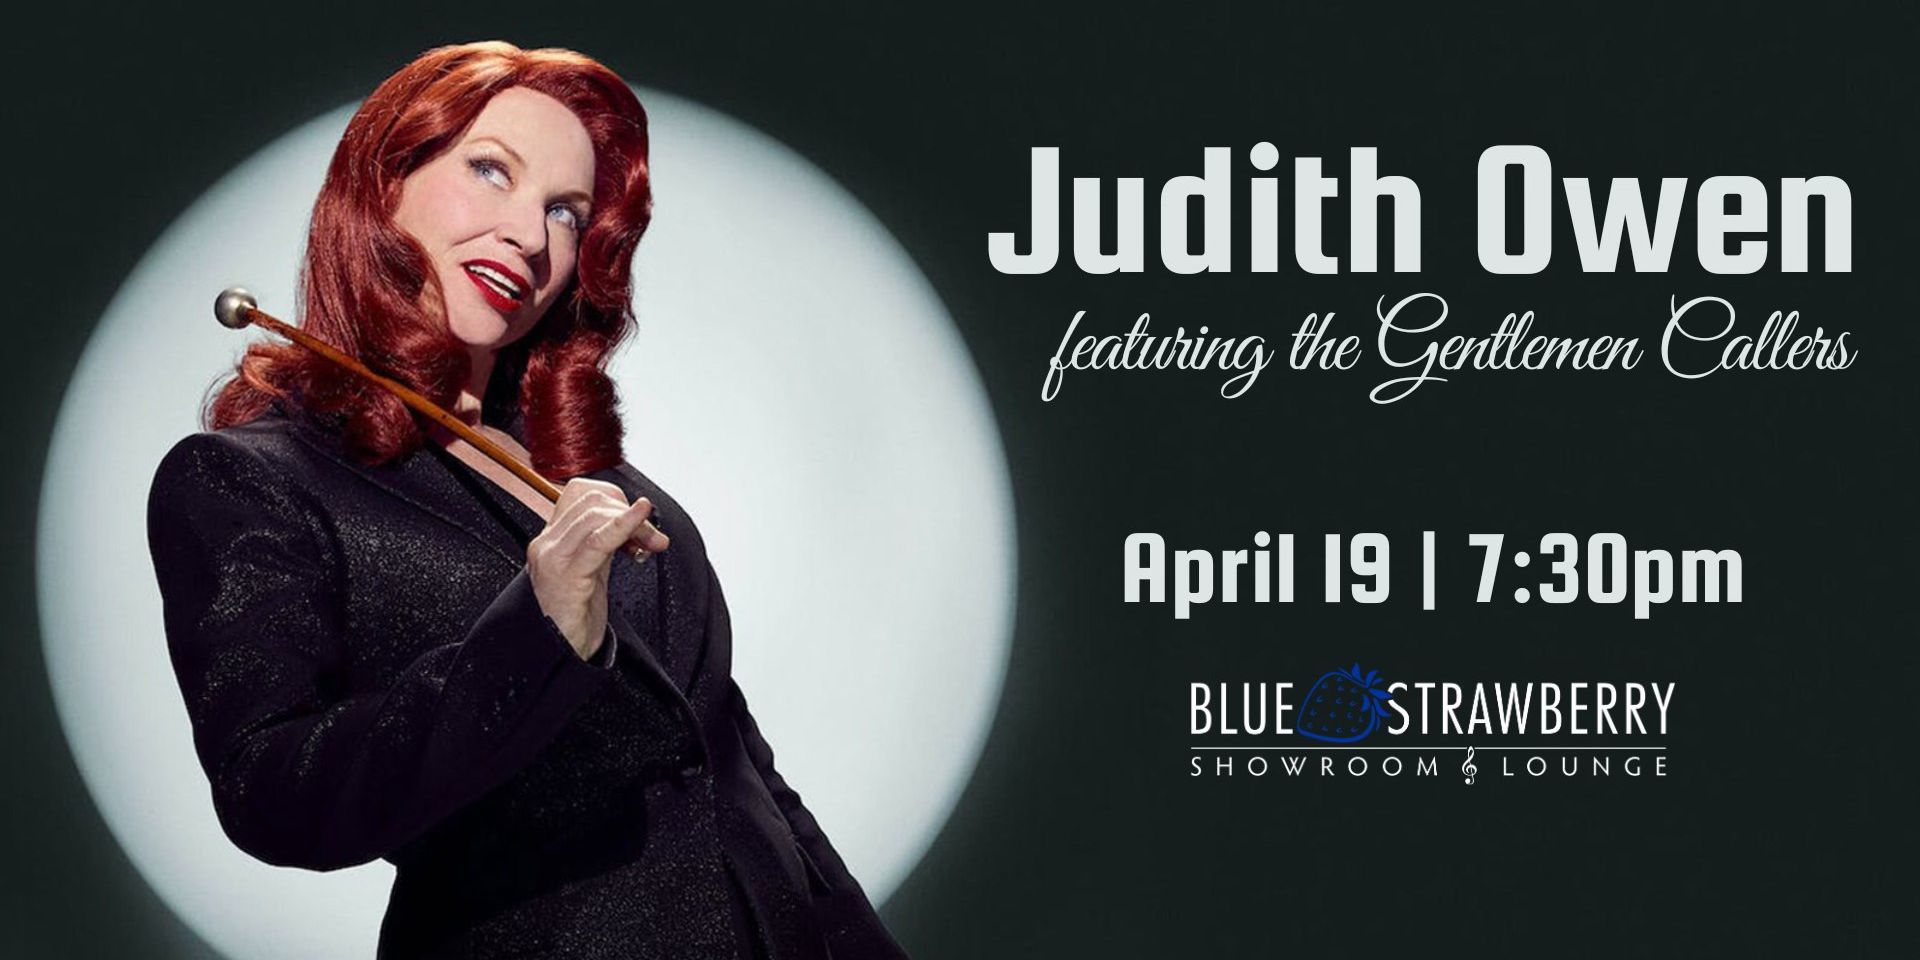 Judith Owen promotional image